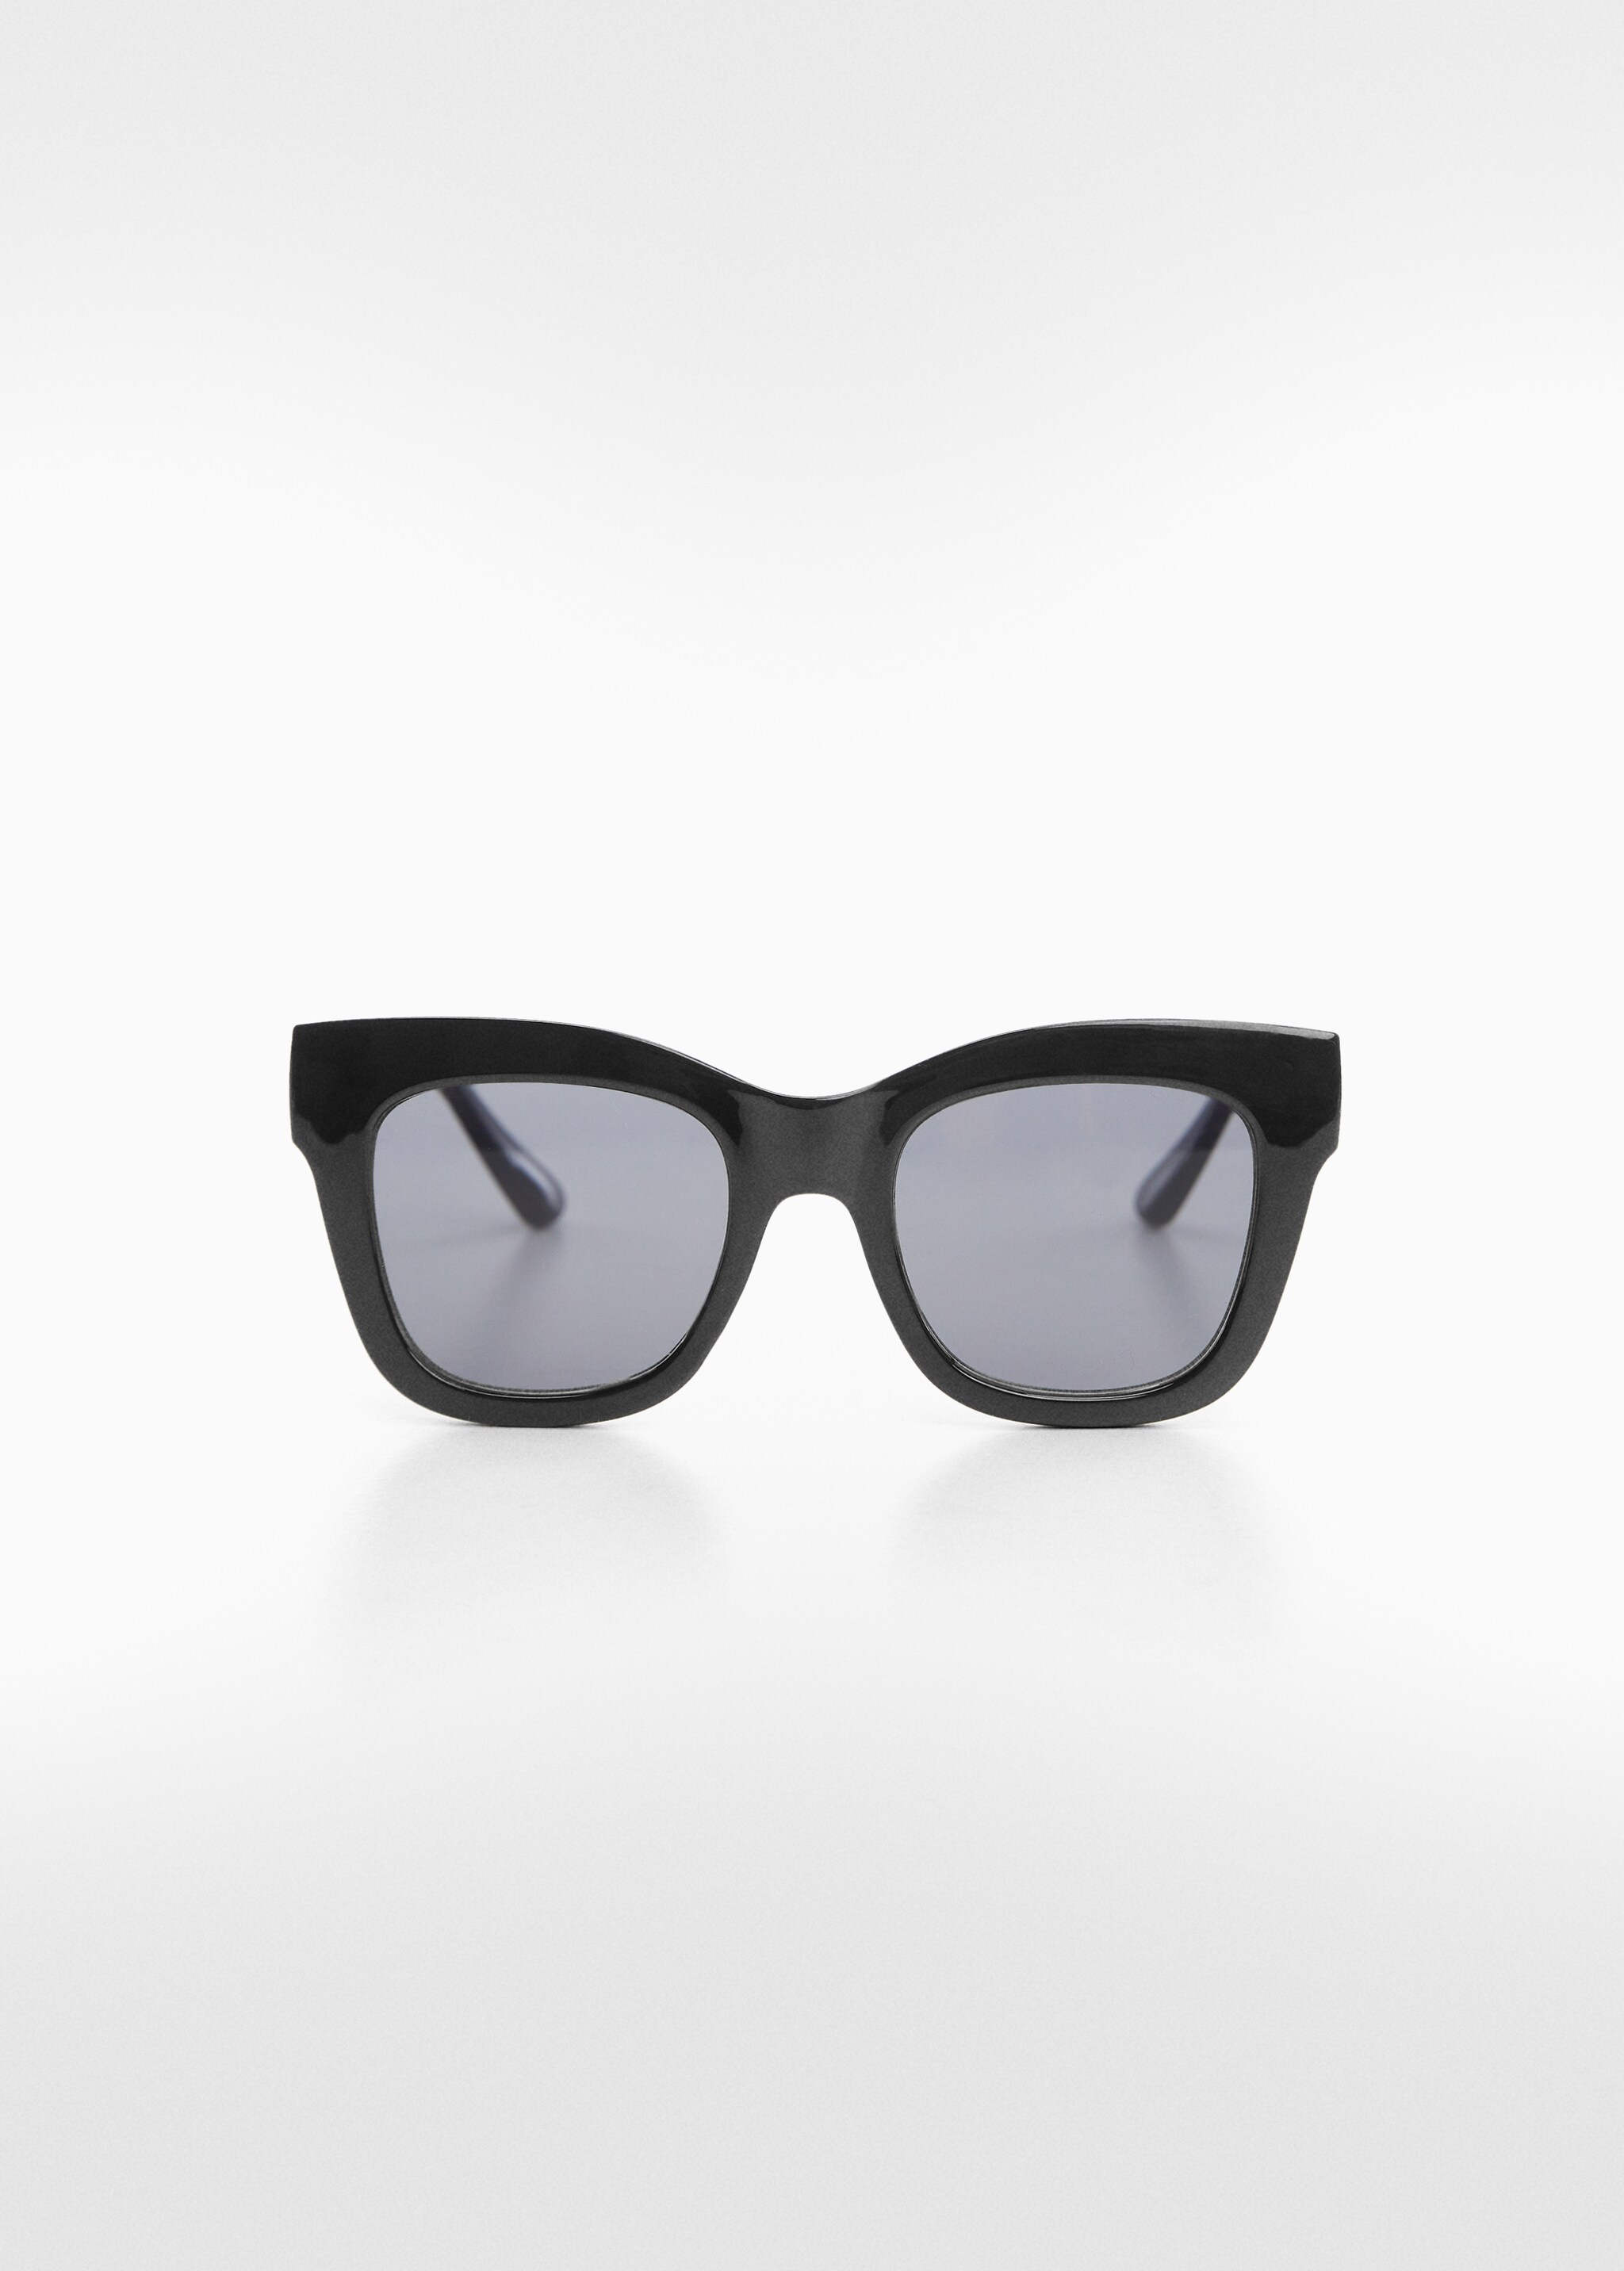 نظارات شمسية بها إطار مربع - منتج دون نموذج